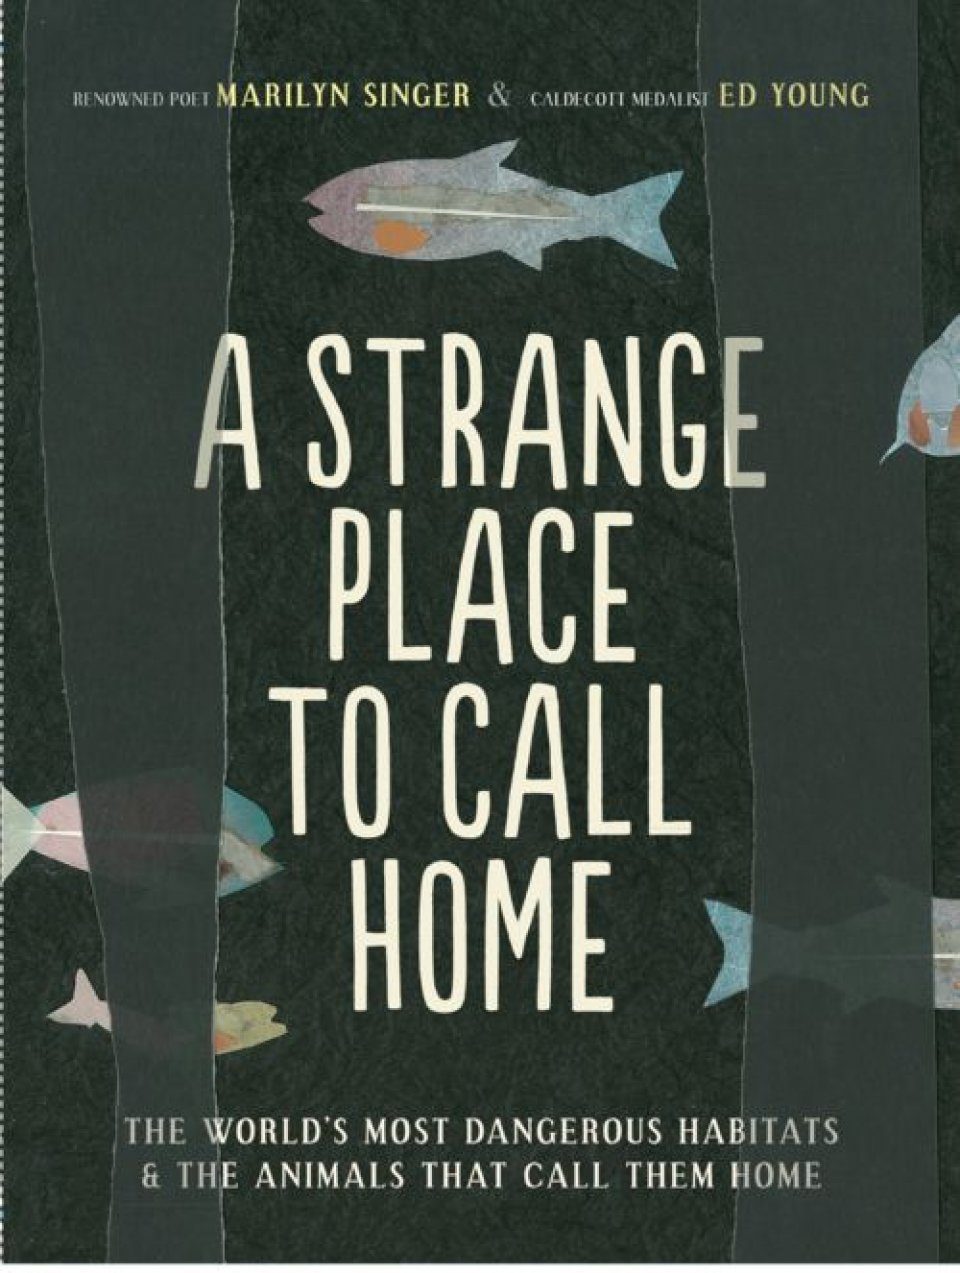 A strange place. A place to Call Home novel.